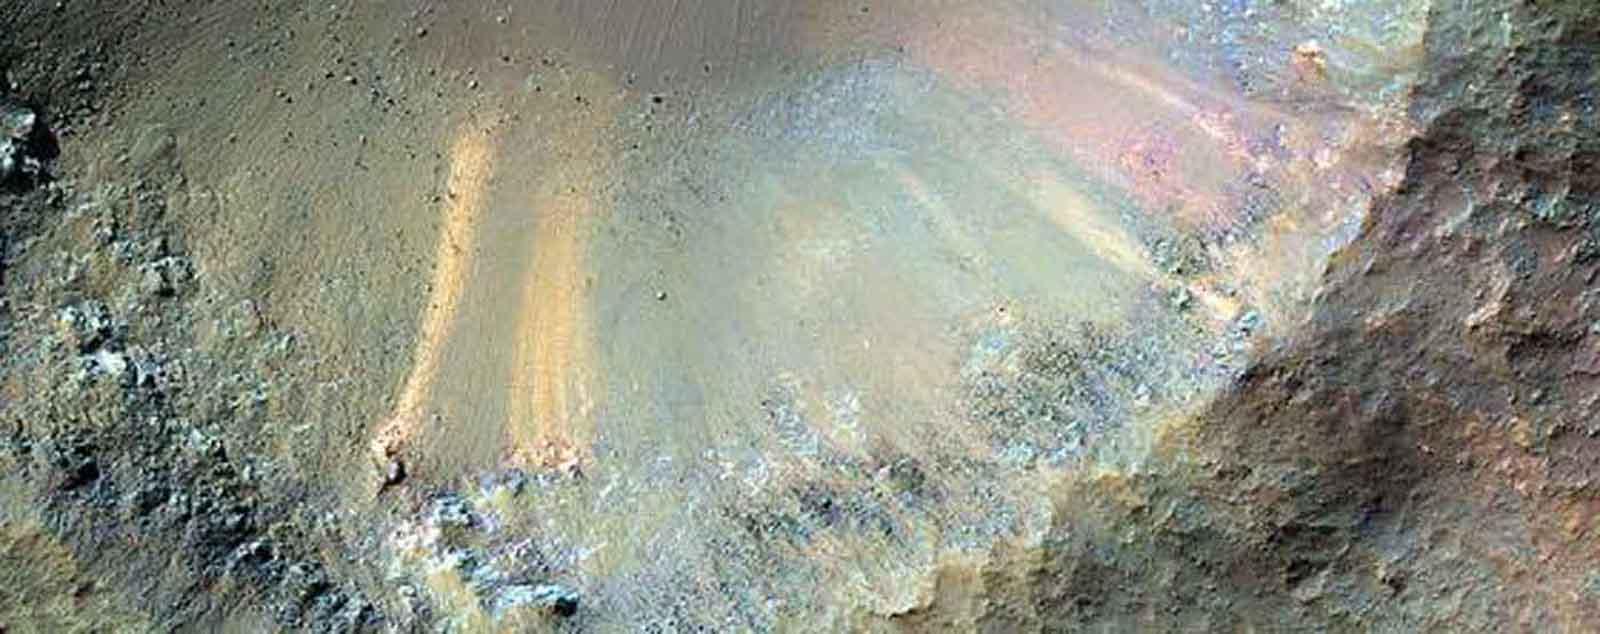 Mars Crater